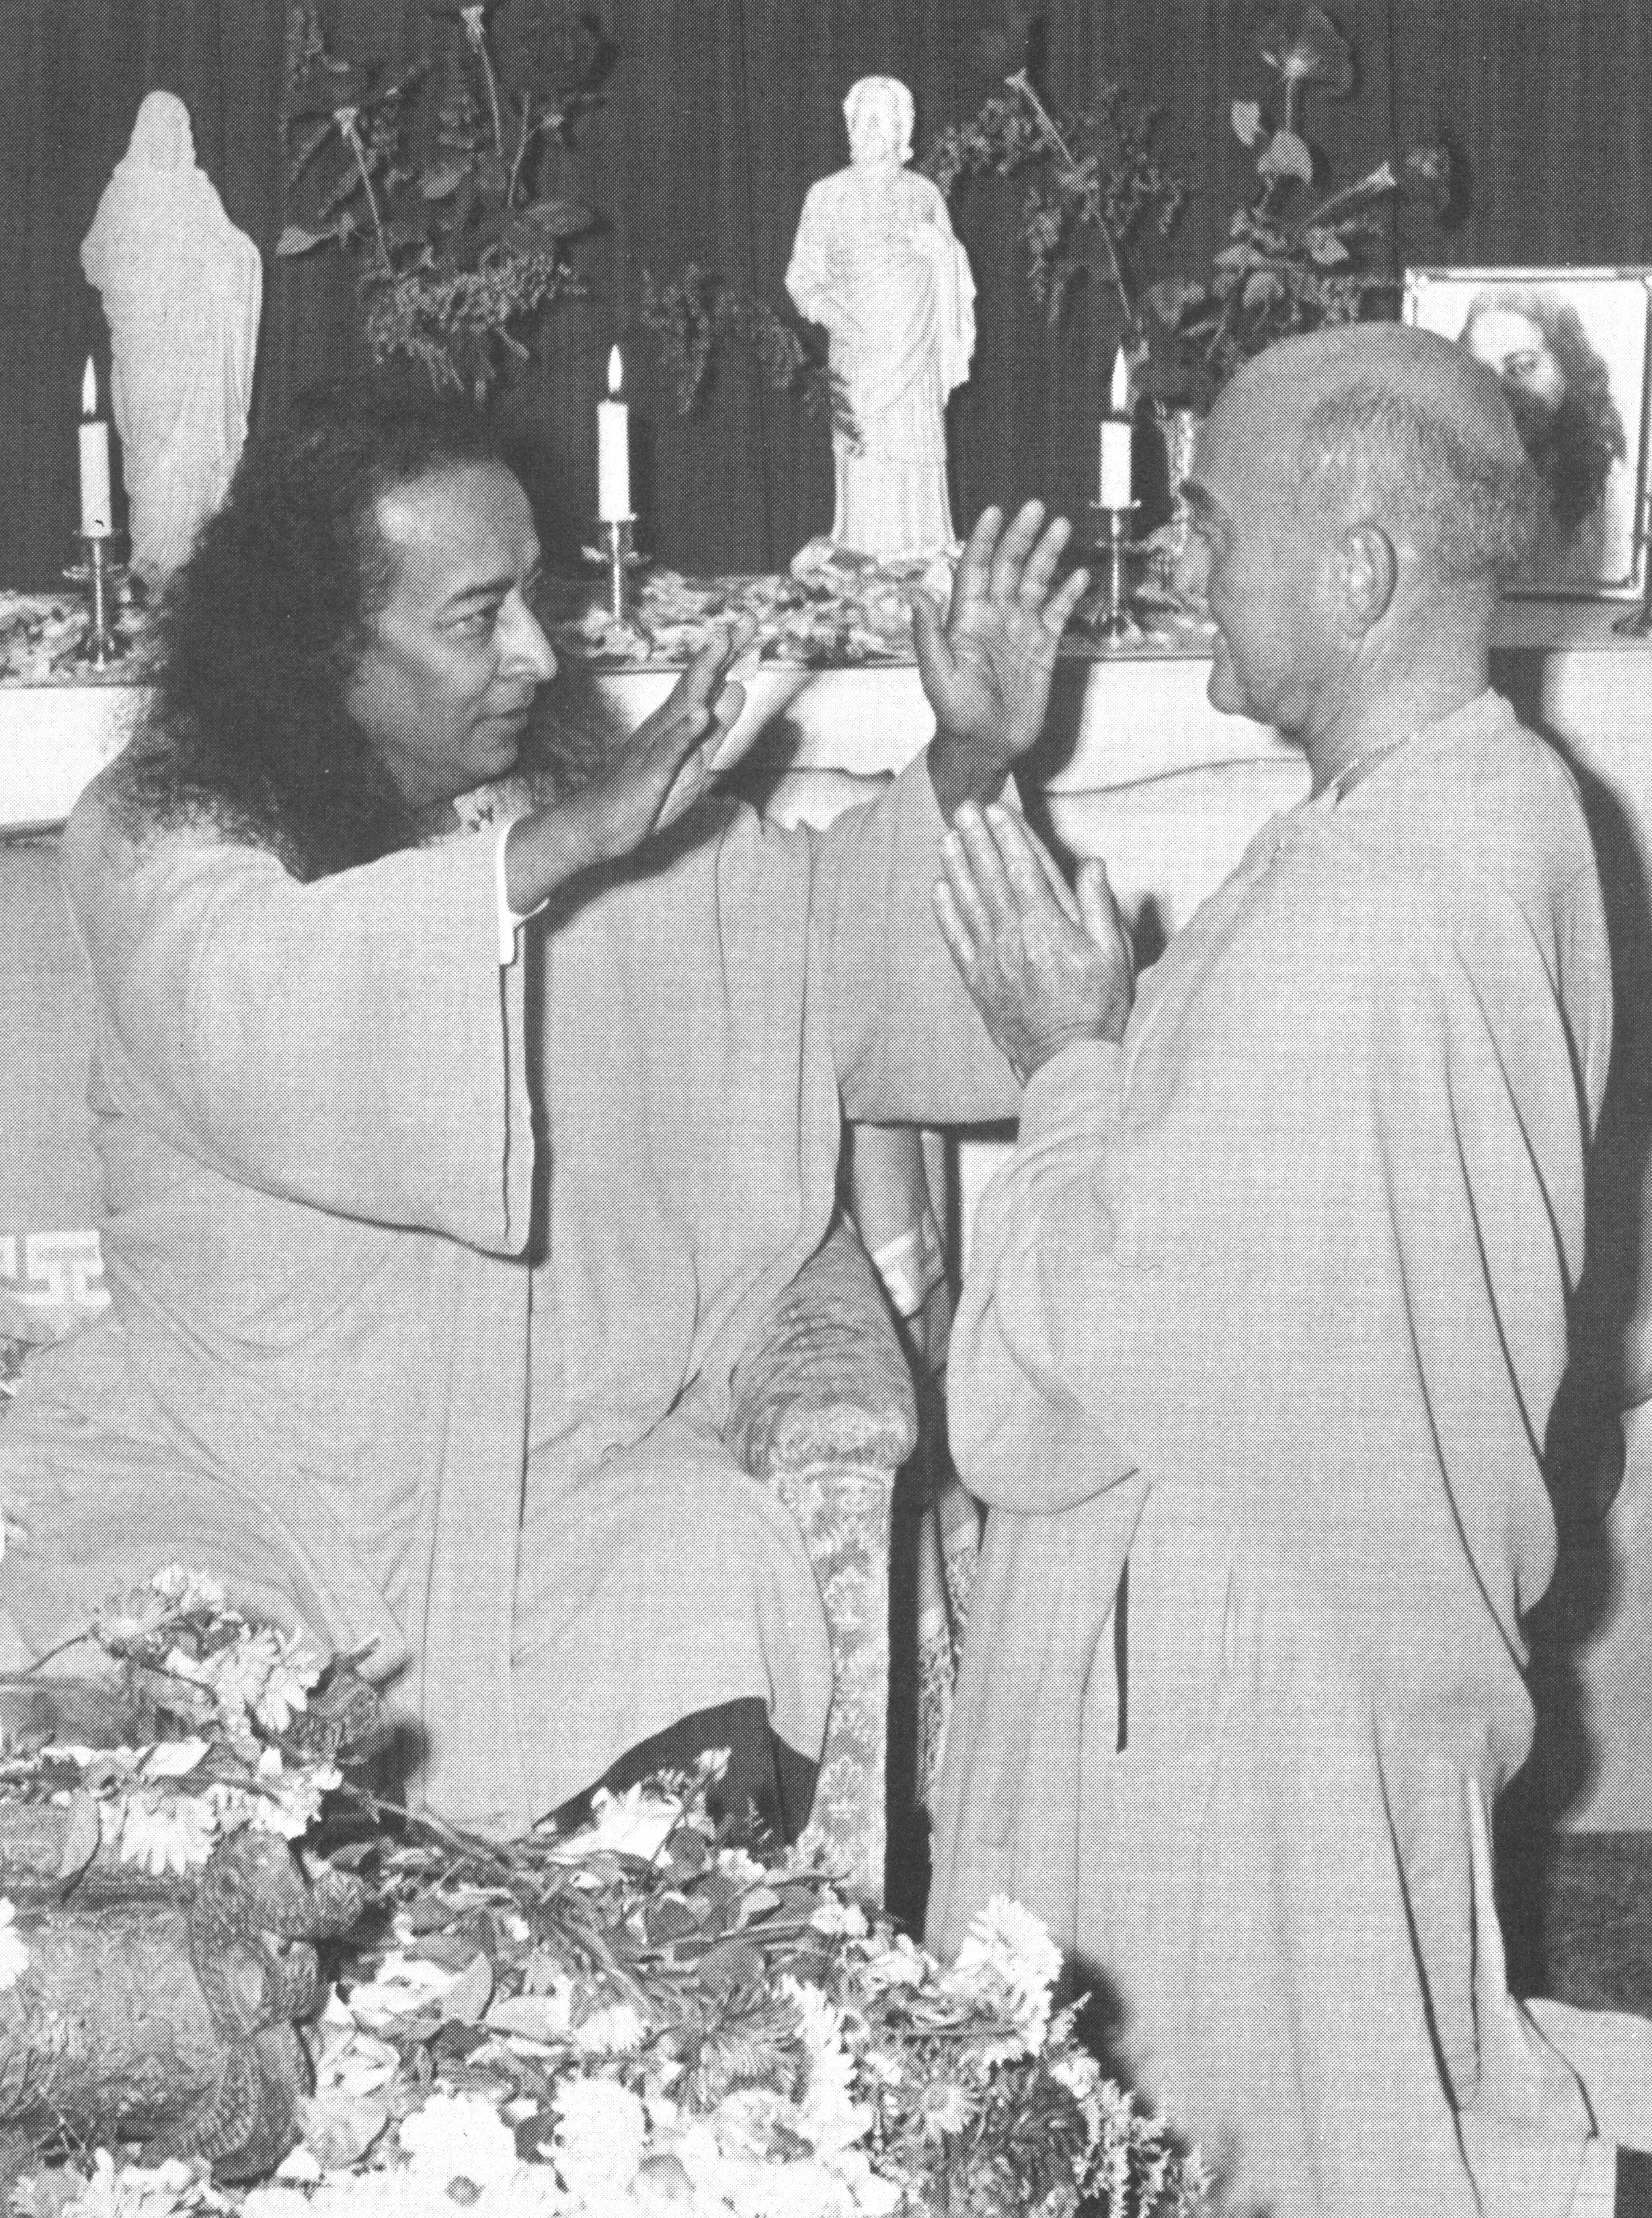 Paramhansa Yogananda blessing disciple Rajarsi Janakananda